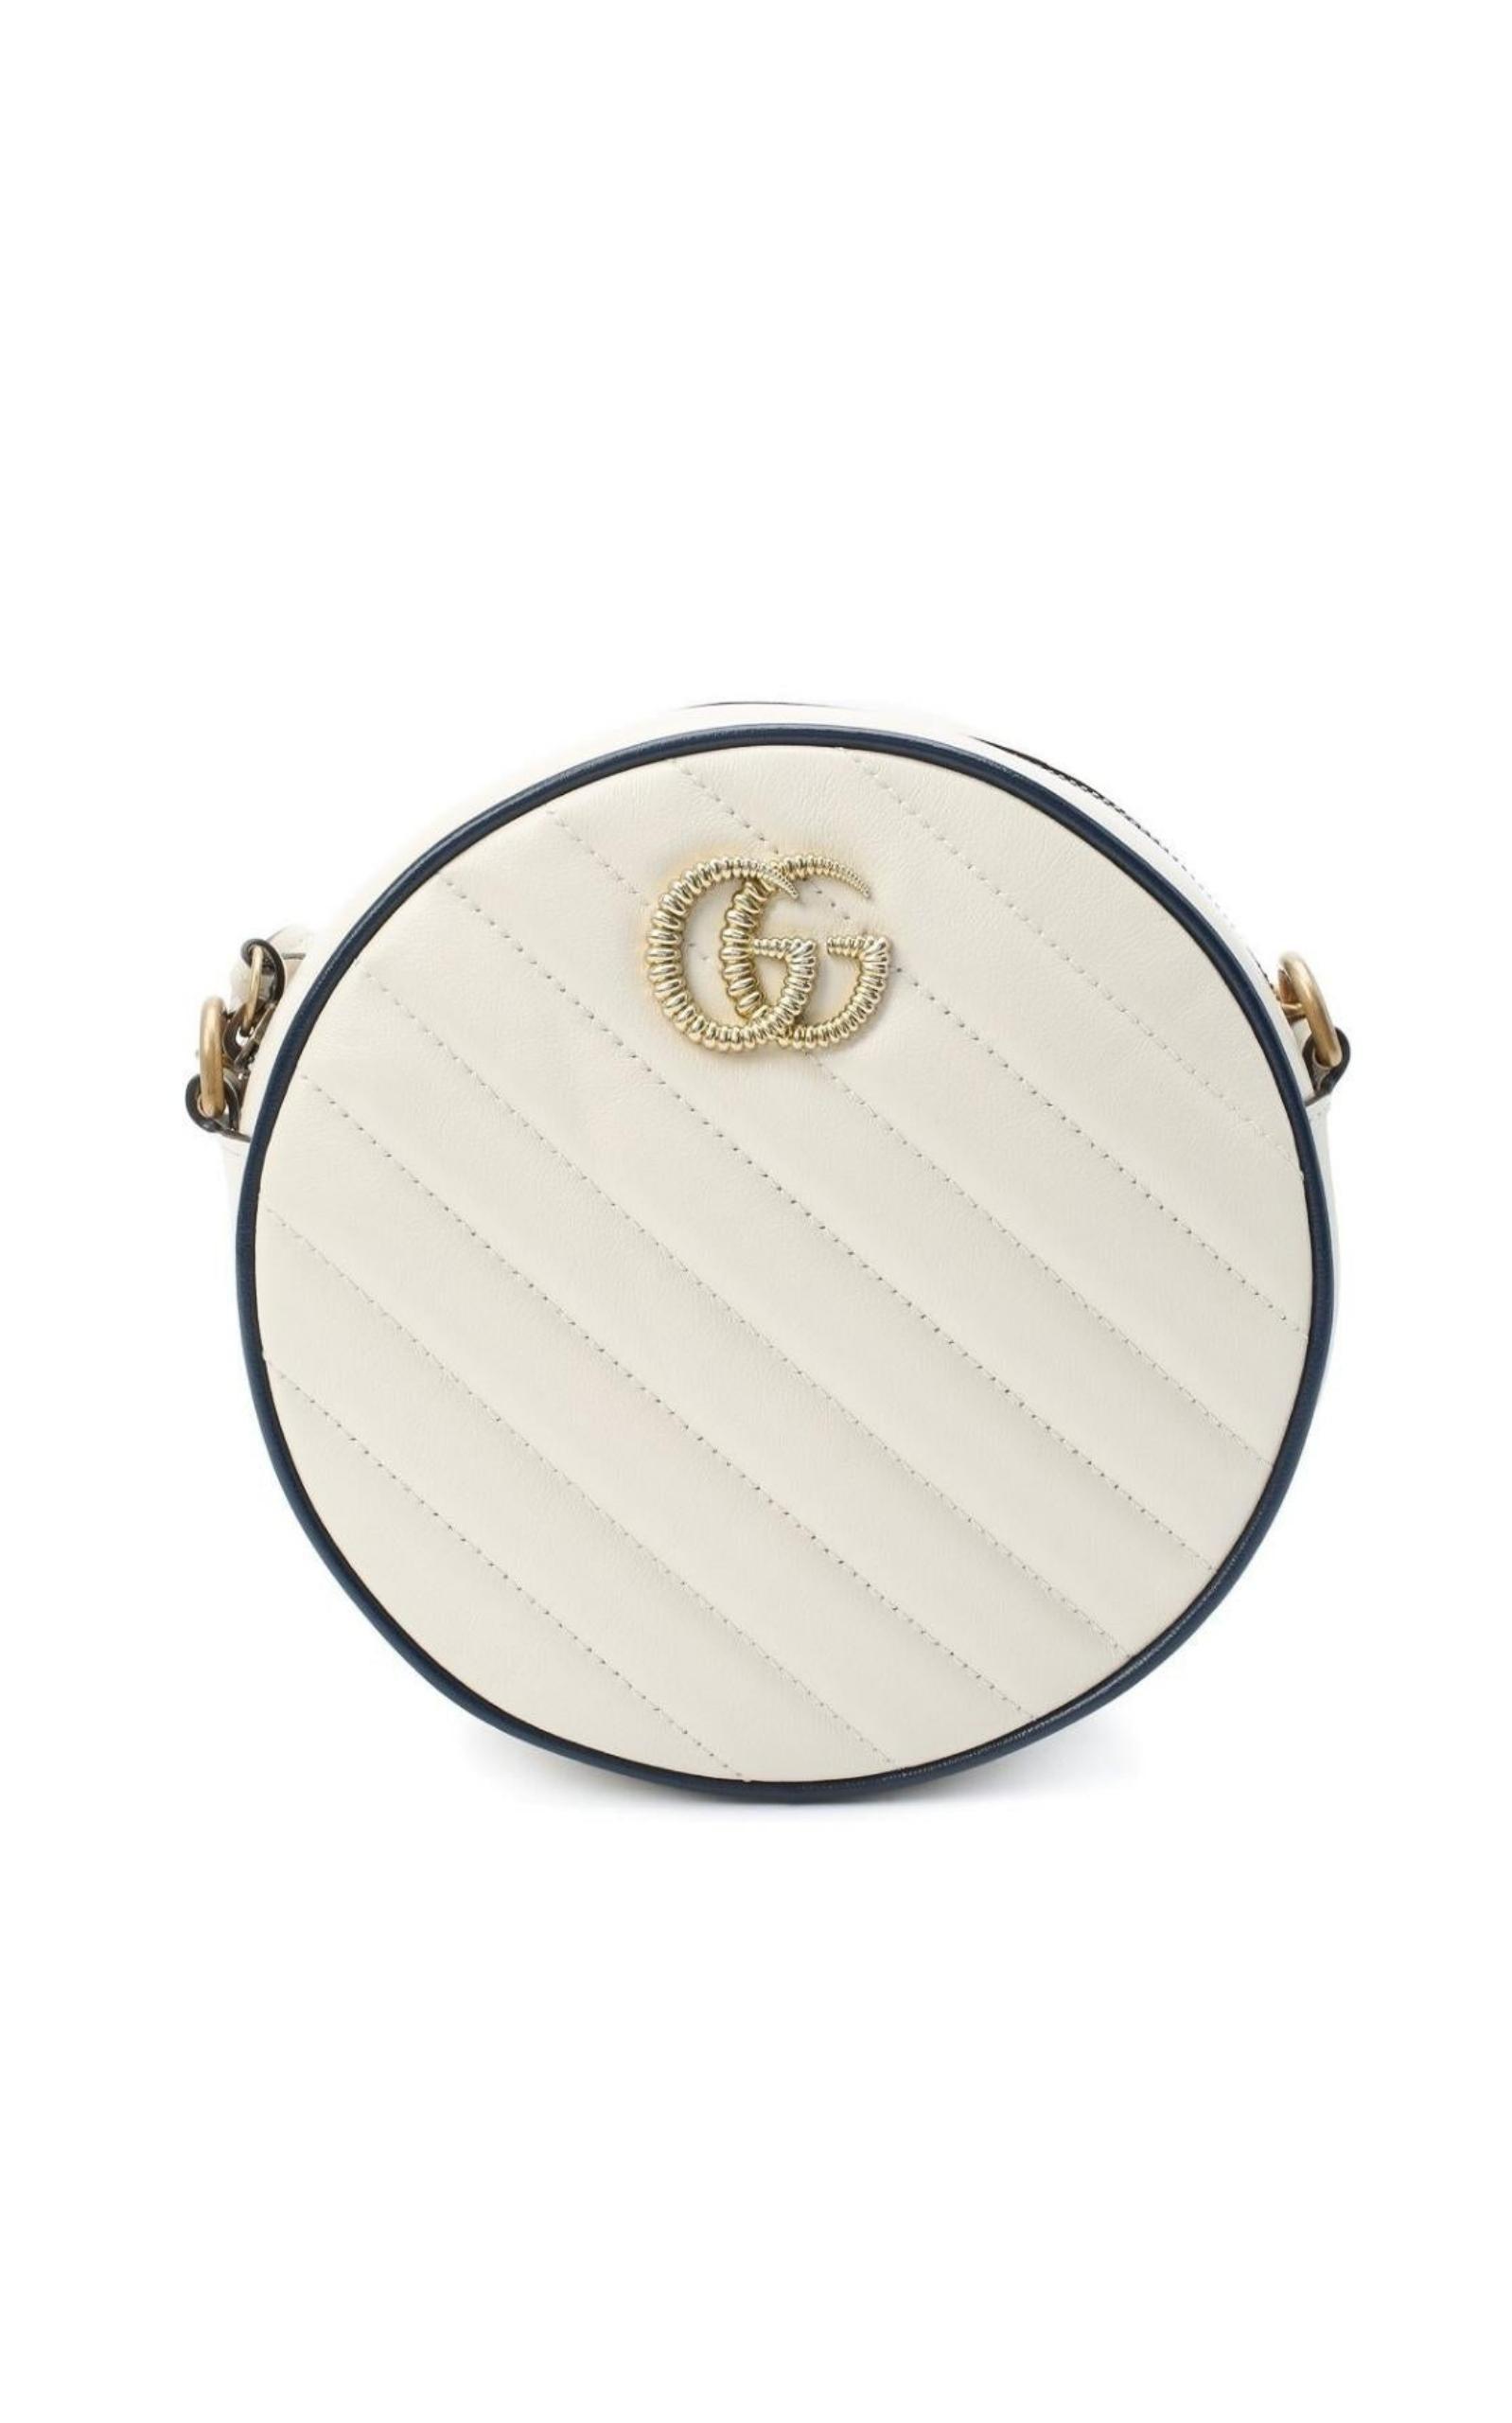 Gucci GG Marmont Round Shoulder Bag Mini White in Matelasse